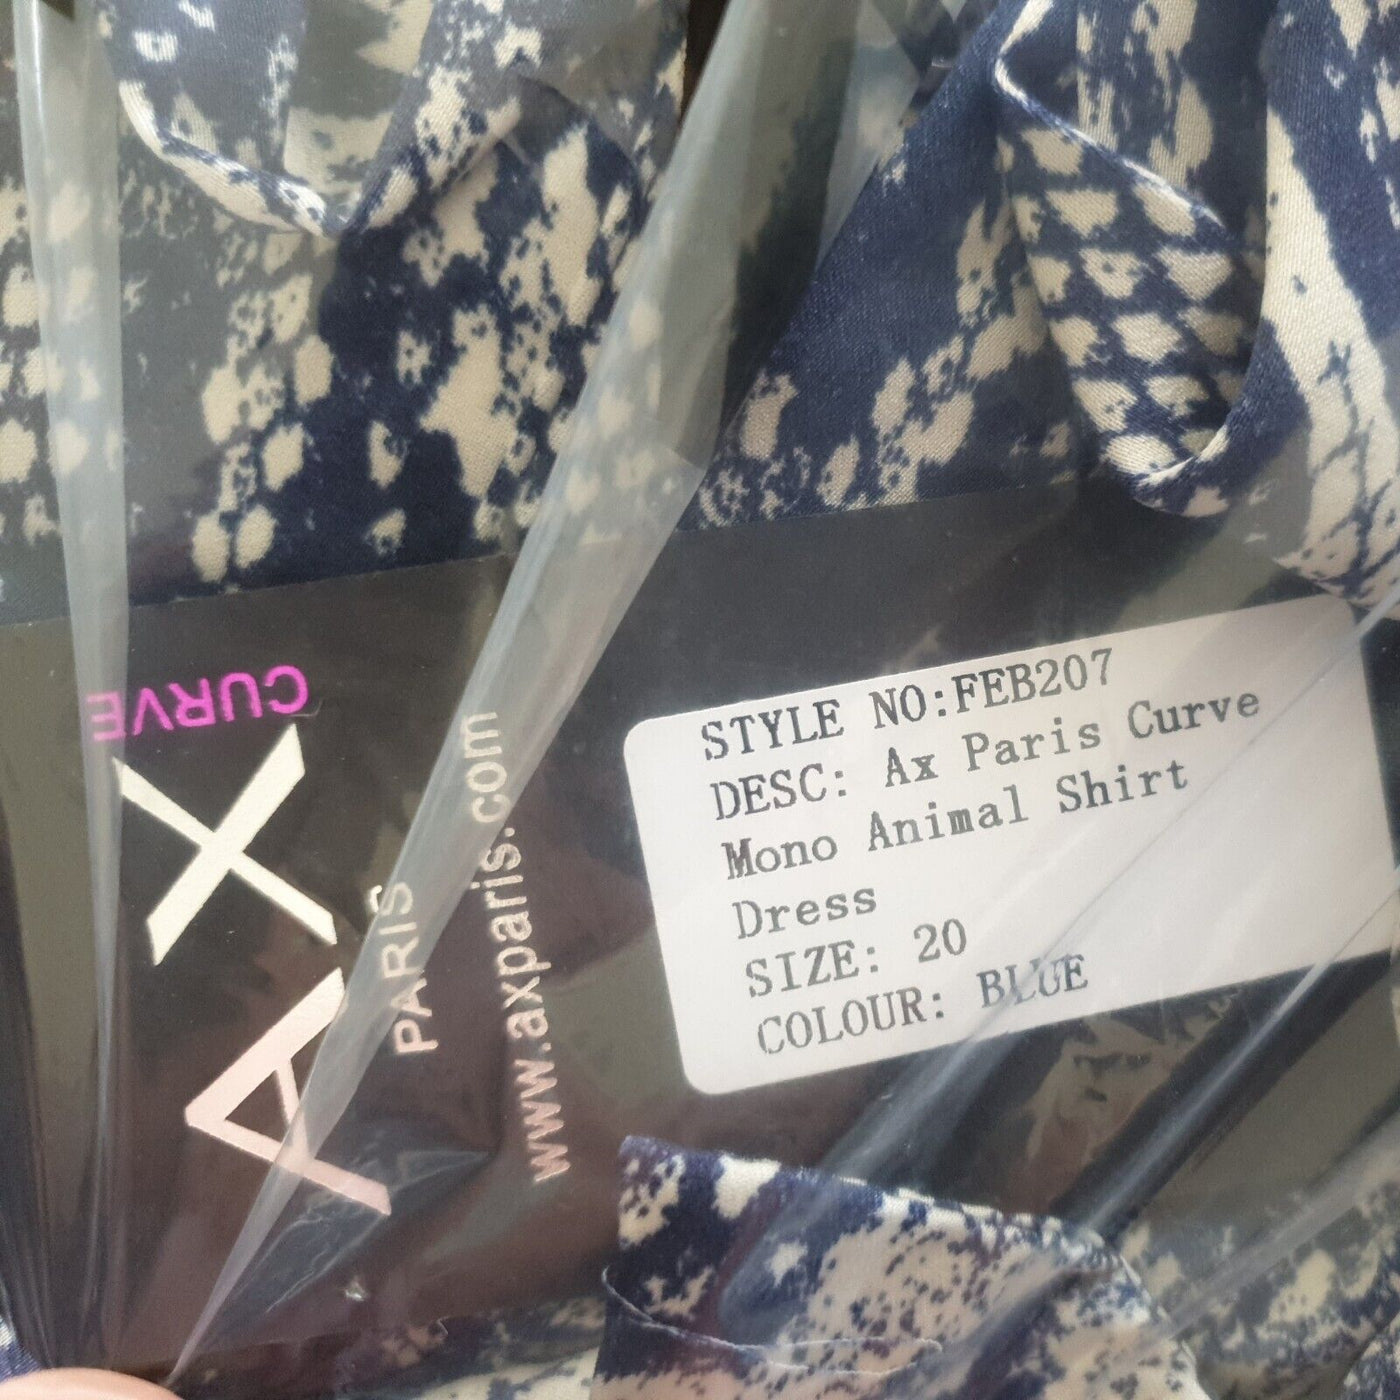 AX Paris Curve Mono Animal Shirt Dress Size 20.